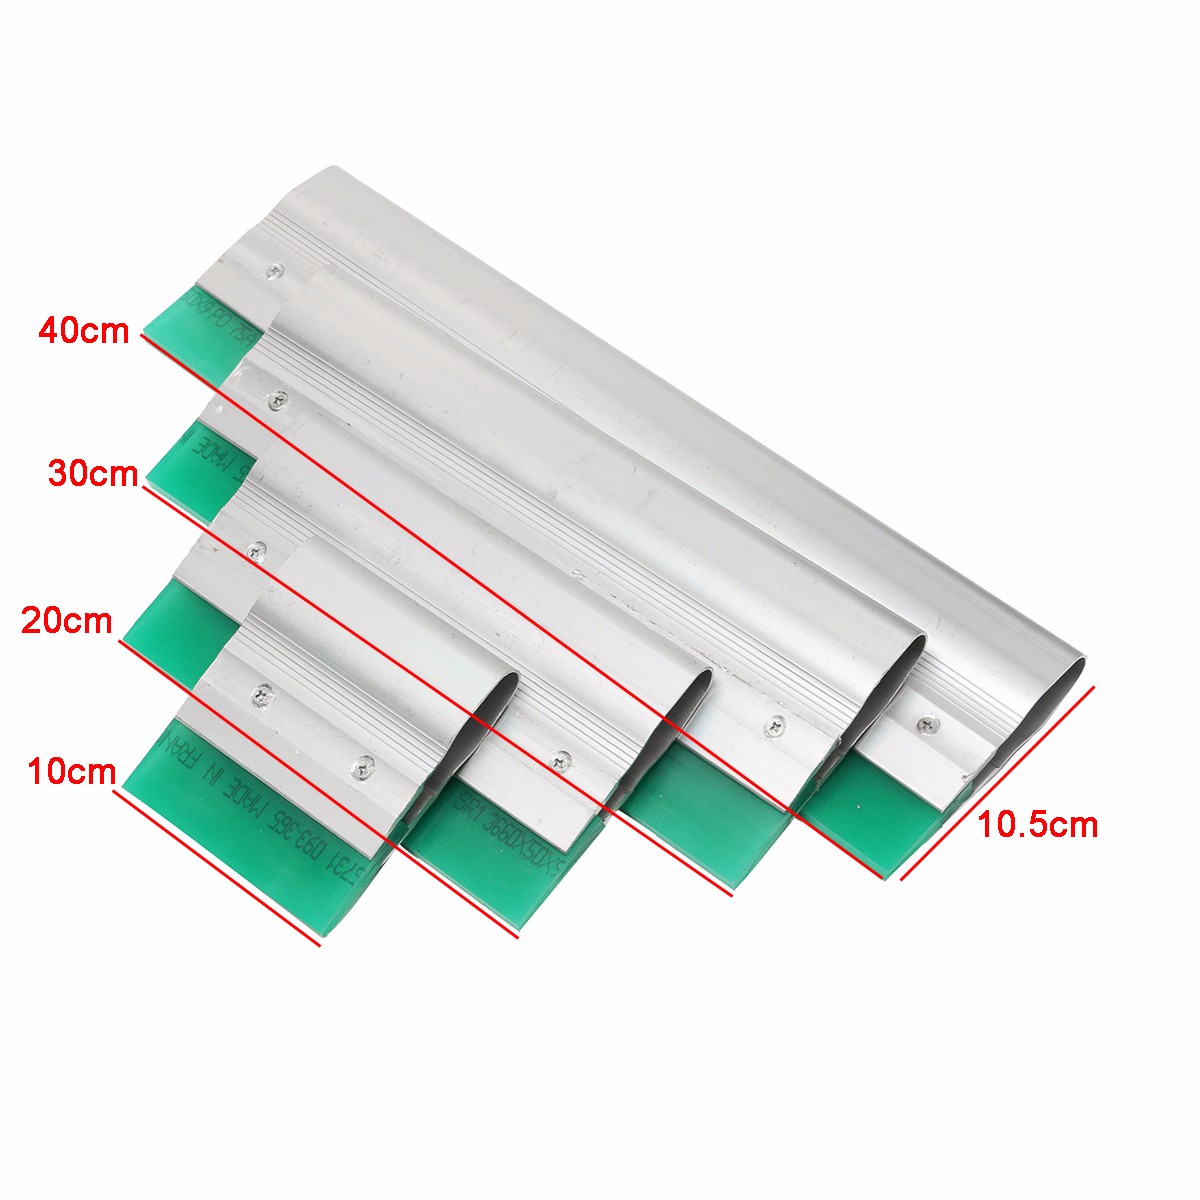 Aluminium-Screen-Printing-Squeegee-Blade-Ink-Scraper-Blade-Tool-10203040cm-1113704-3